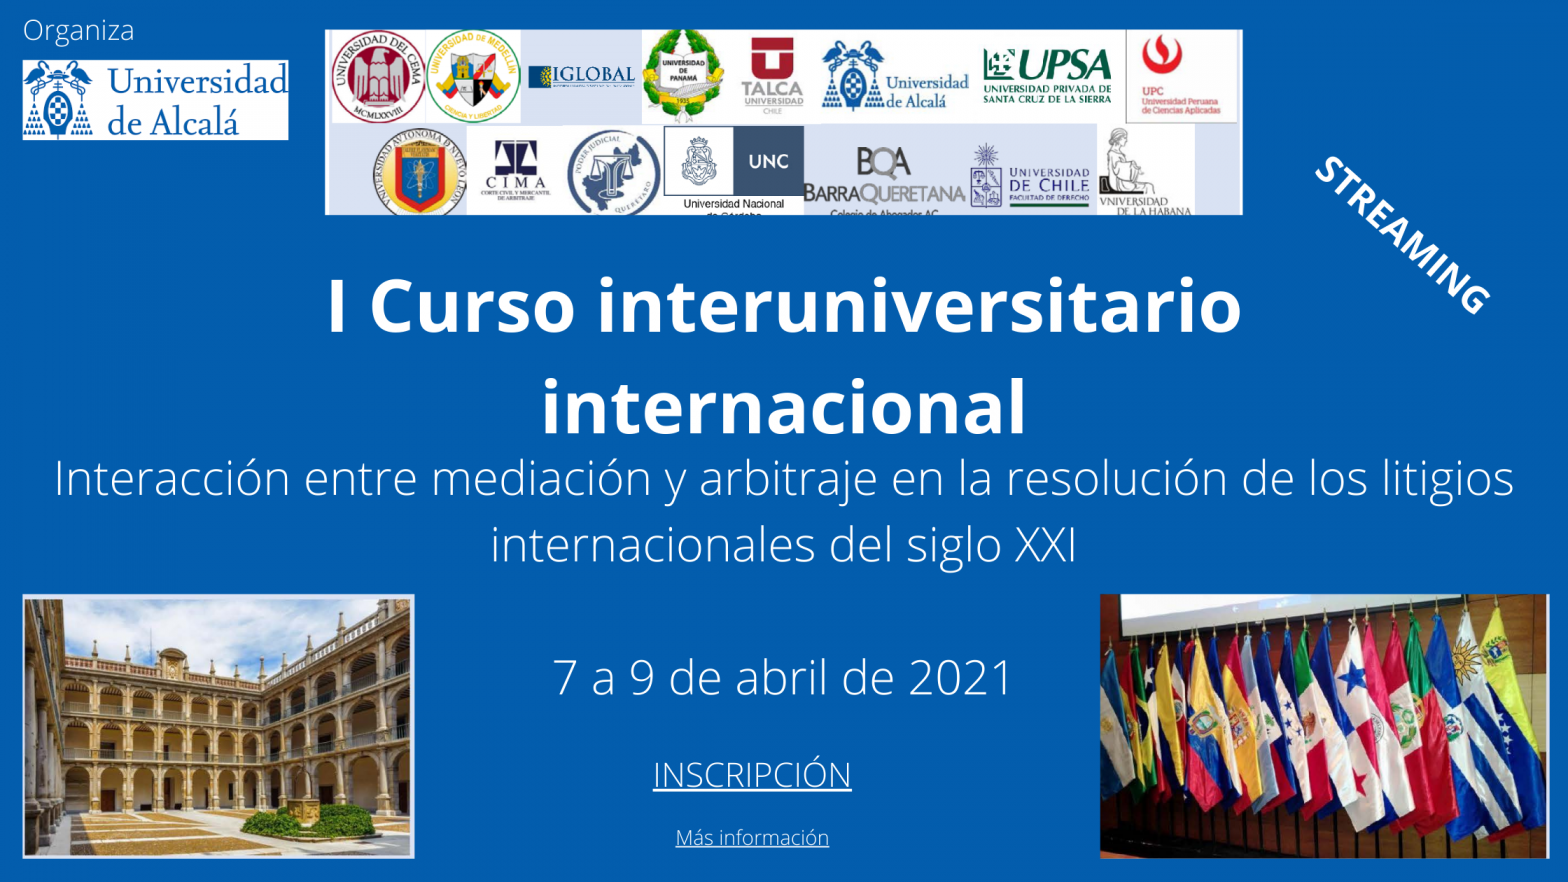 I Curso interuniversitario internacional